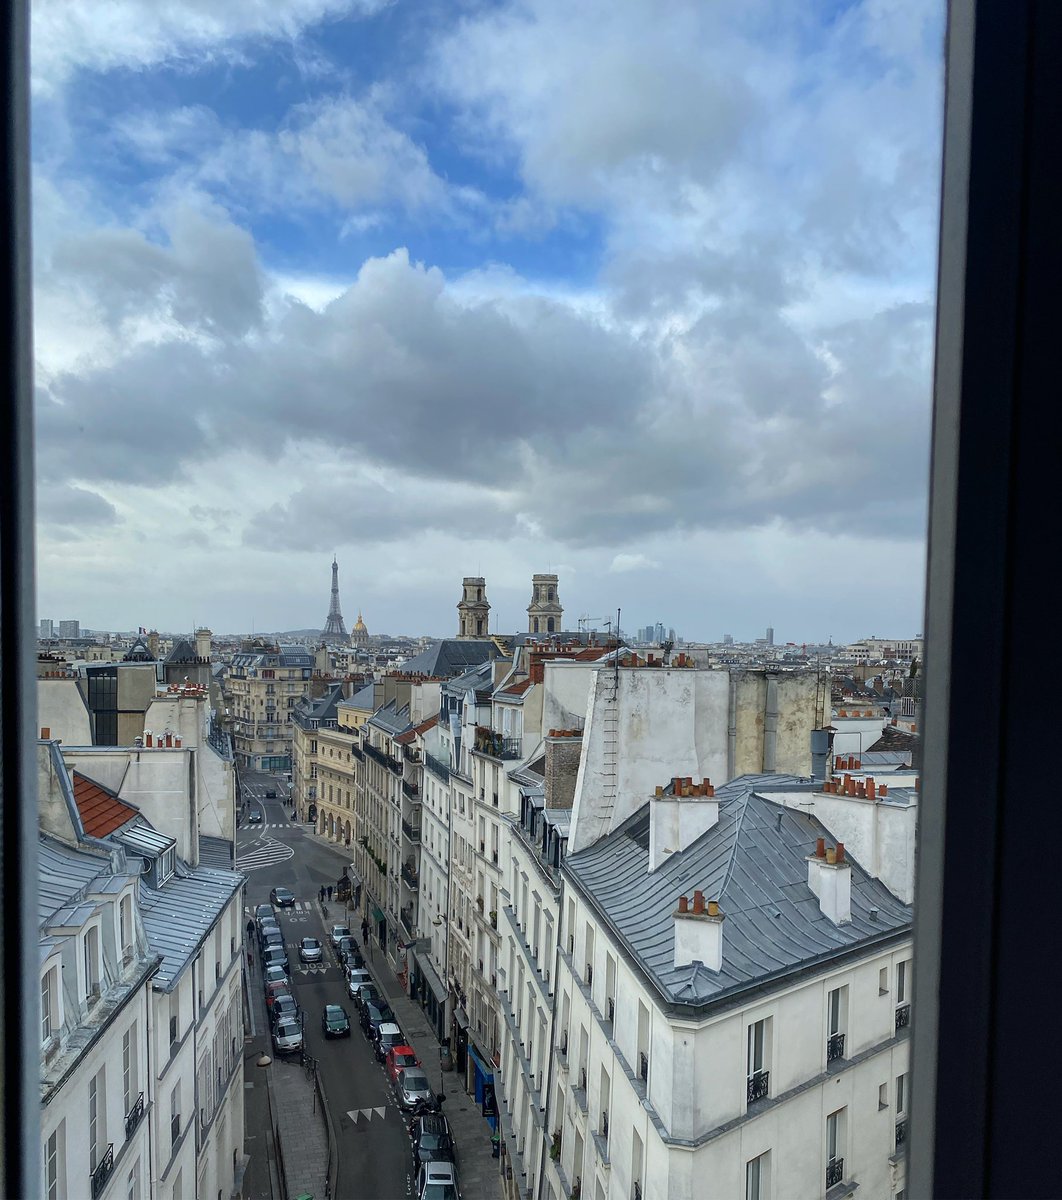 My kind of view ☁️🗼👁
#toureiffel #toureiffelparis #toureiffel🗼 #toureiffelofficielle #eiffeltower #eiffel #eiffeltowerparis #eiffelofficielle #eiffel_tower #eiffeltower🗼 #paris #victorparigi